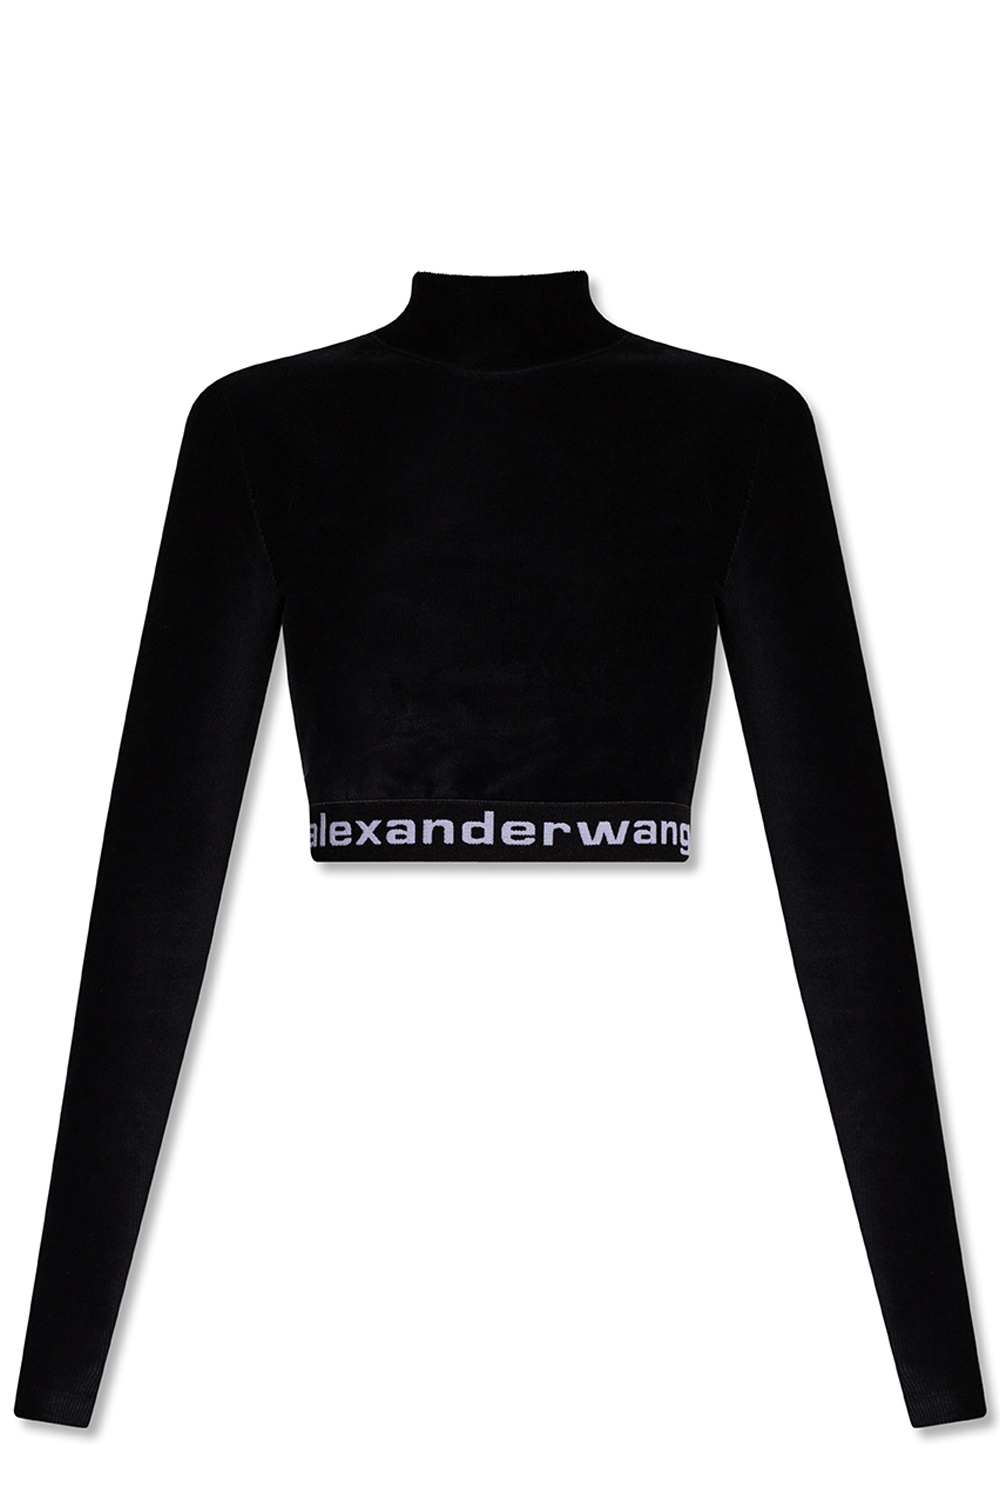 Black Cropped top with logo Alexander Wang - Vitkac Canada